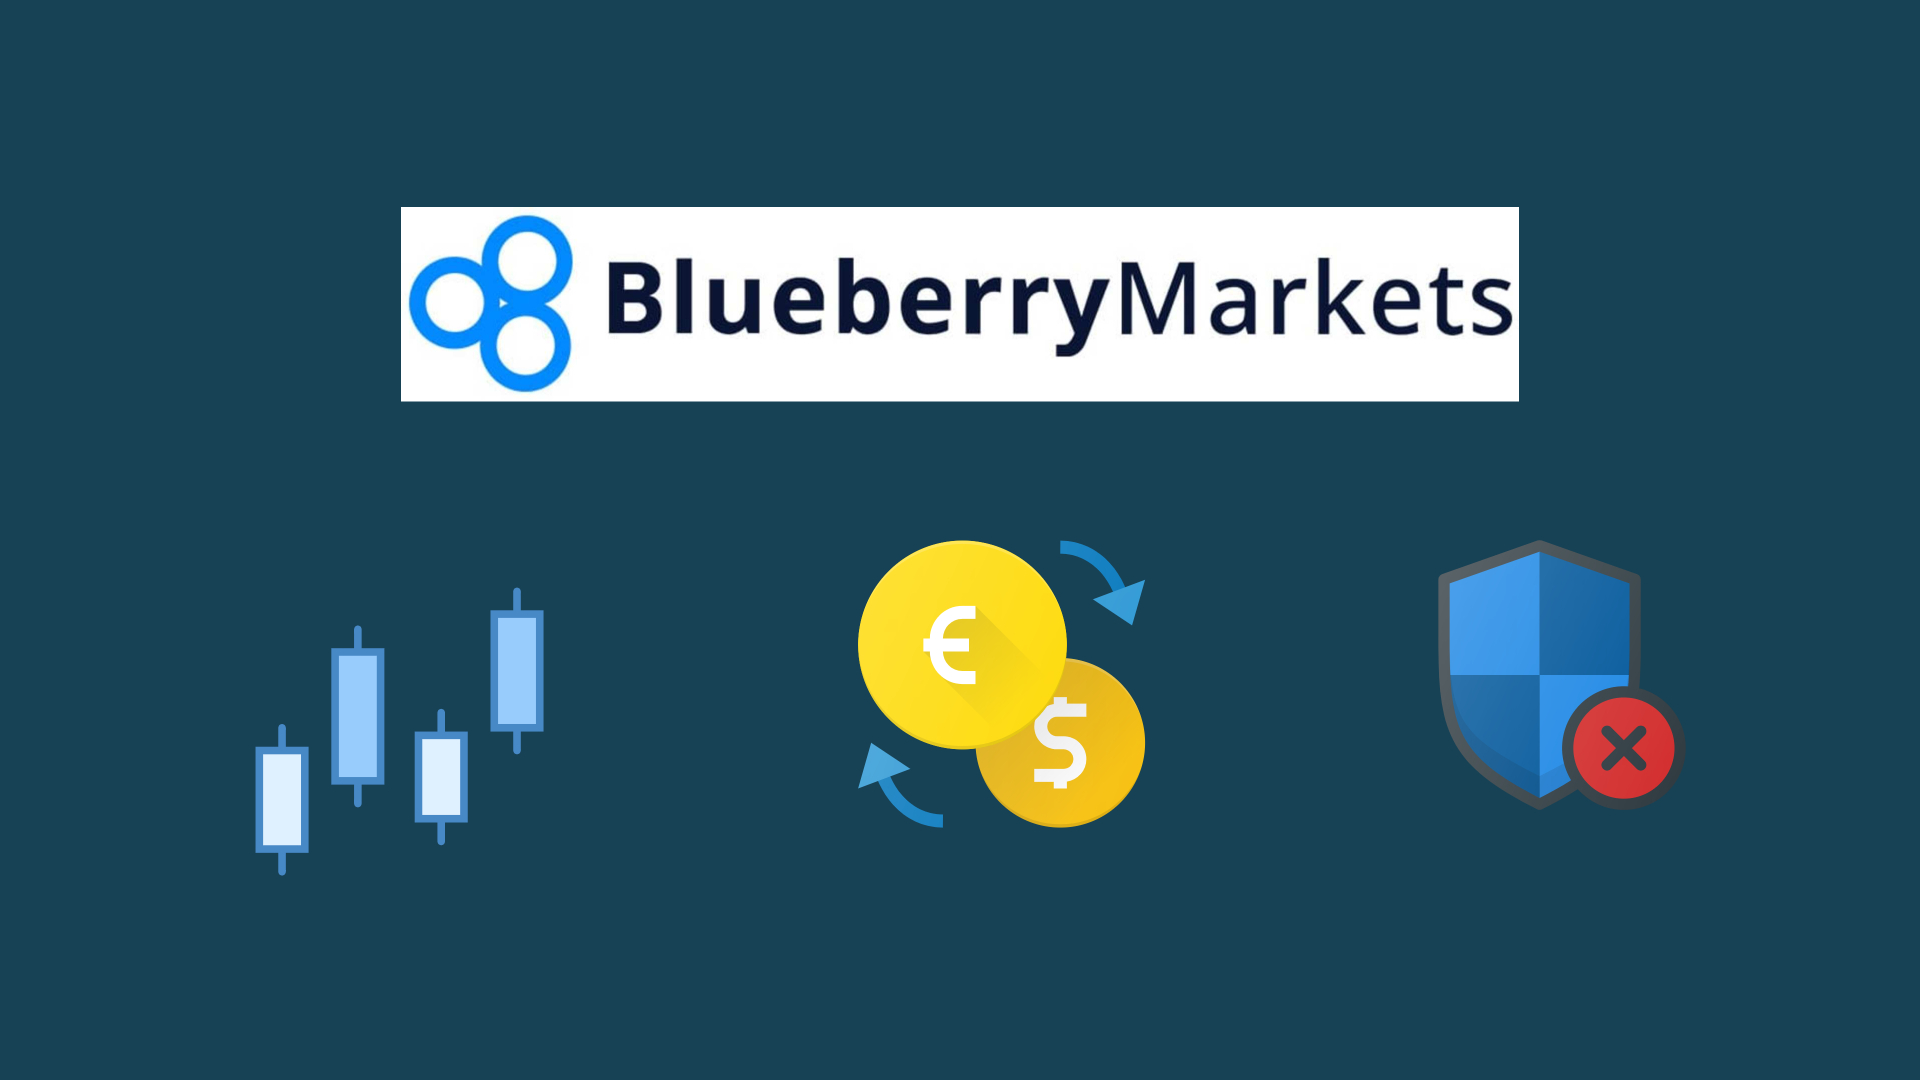 Blueberry markets